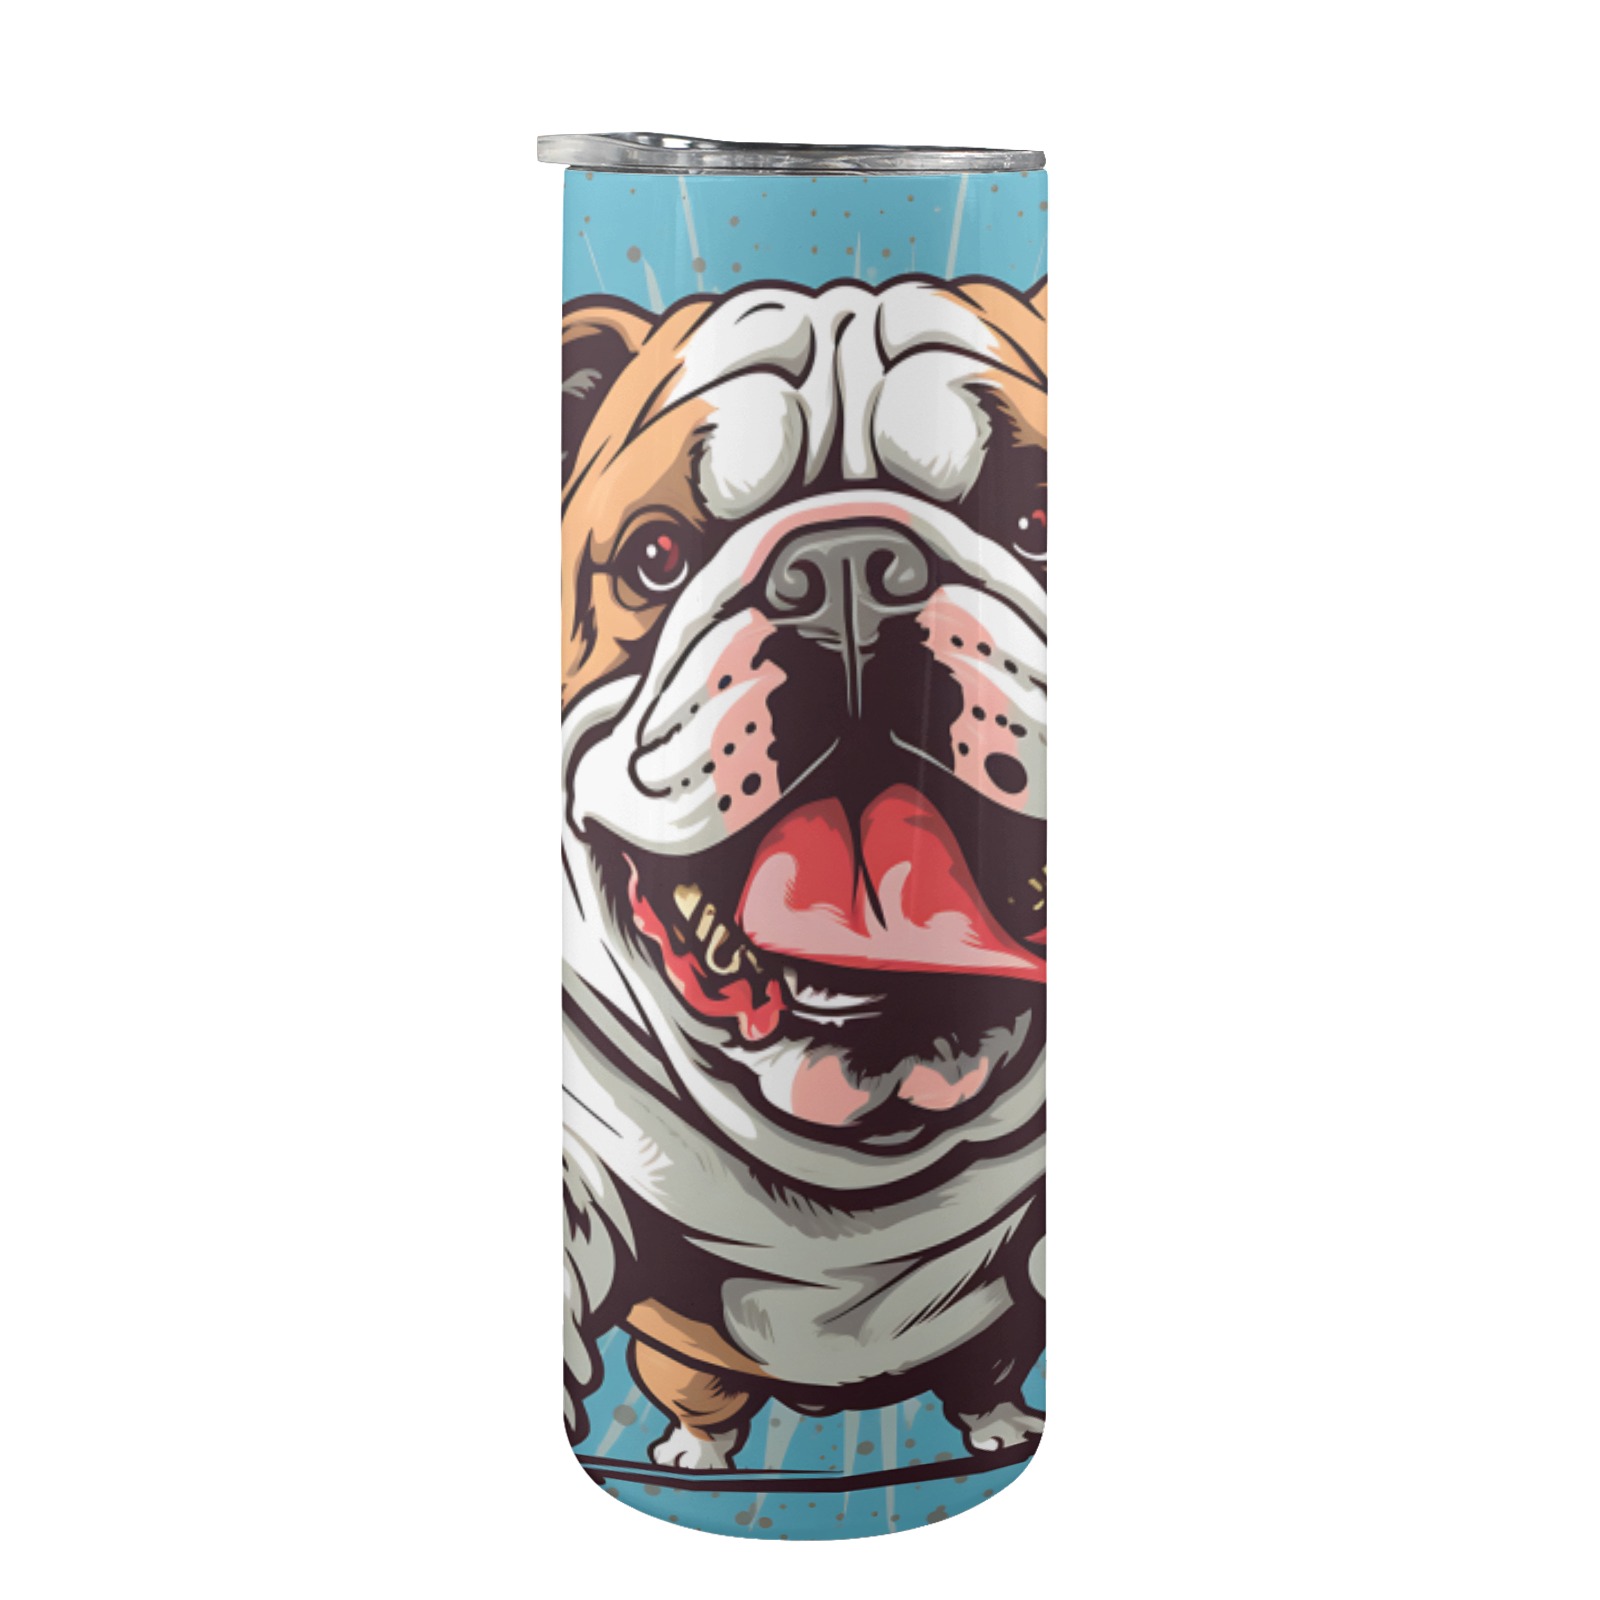 Bulldog Pop Art 20oz Tall Skinny Tumbler with Lid and Straw